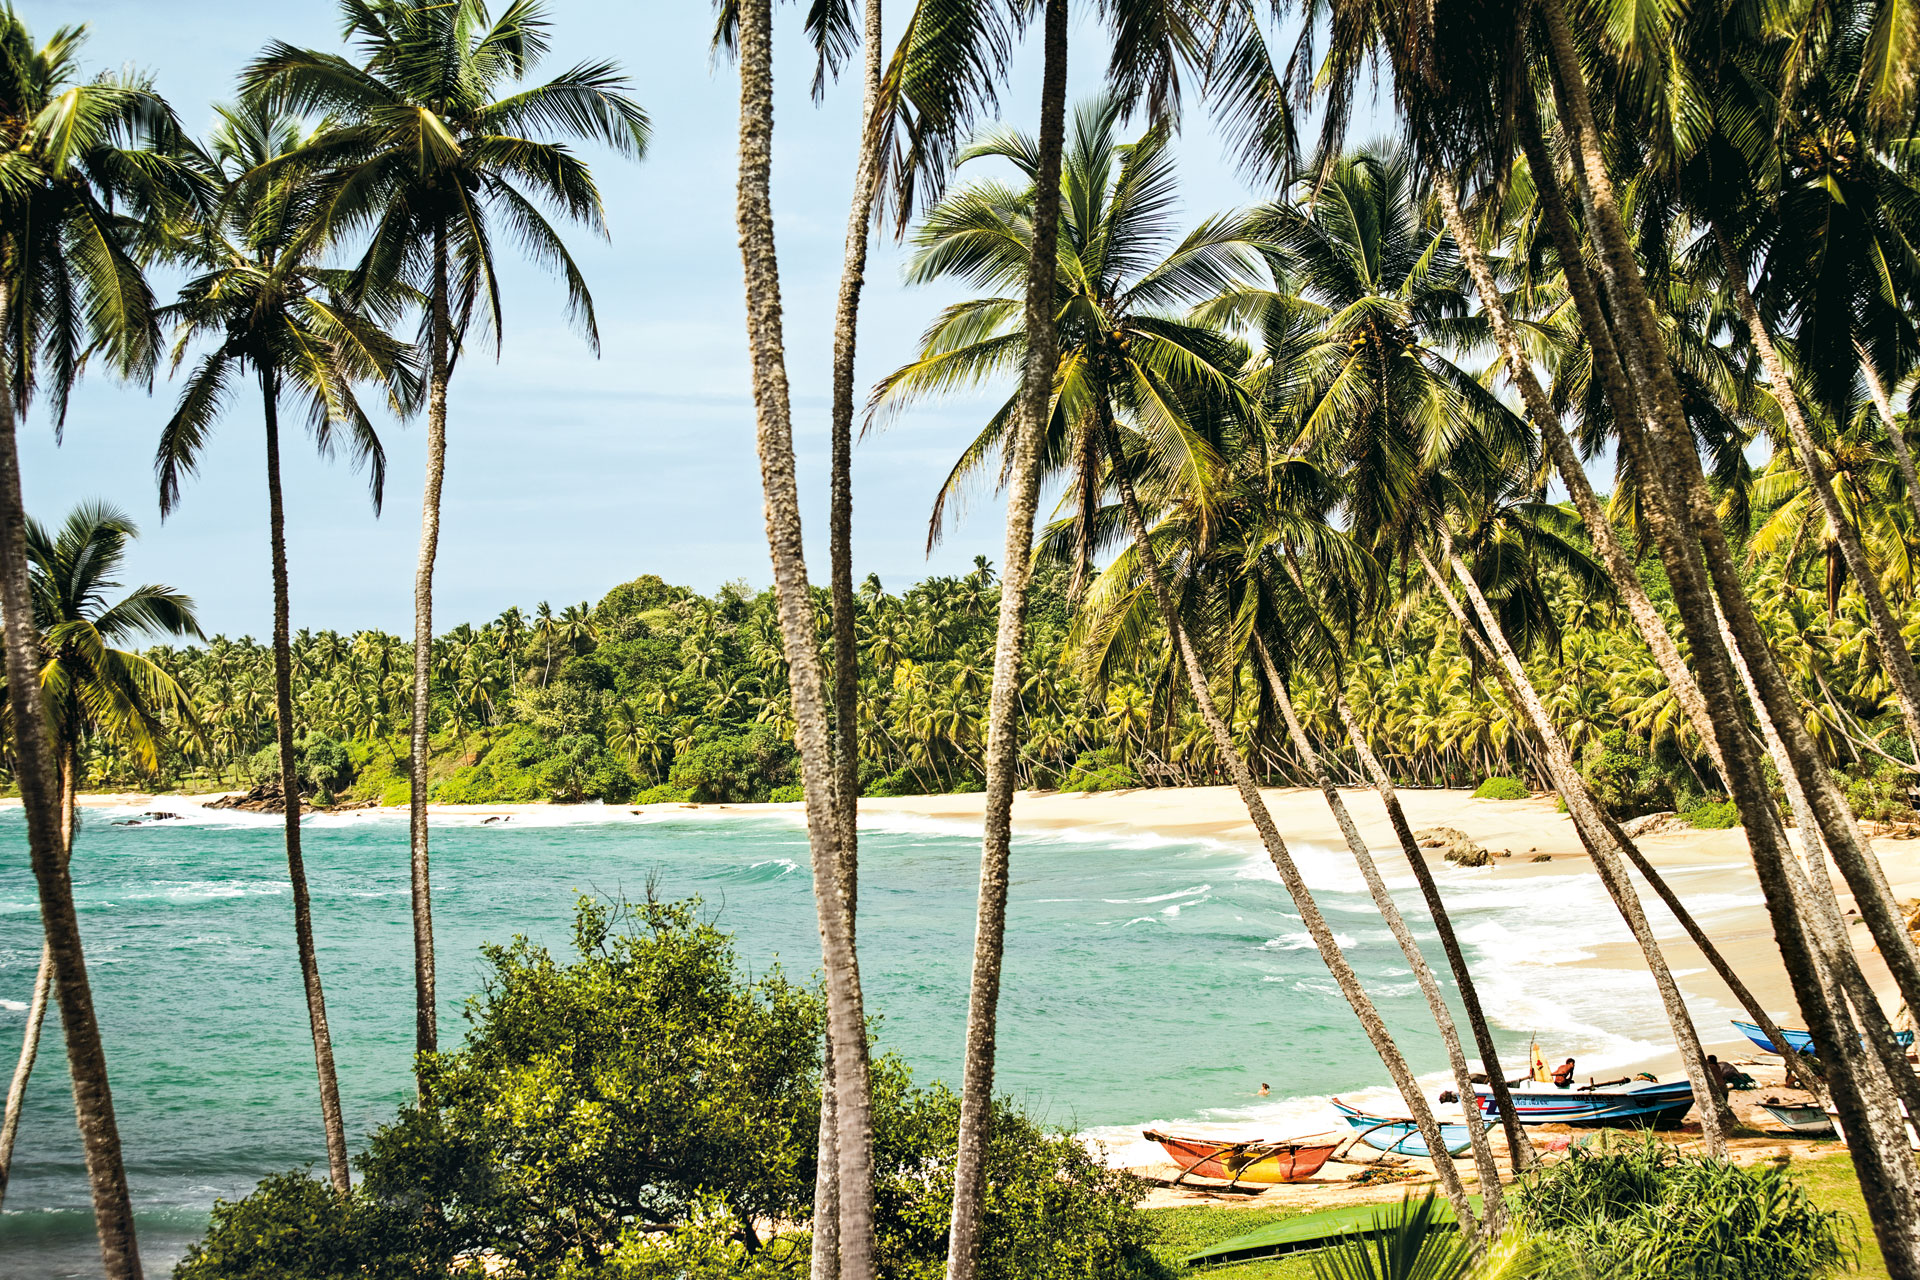 Шри ланка колония. Тангалле Шри Ланка. Пляж Аманвелла Шри Ланка. Остров Шри-Ланка в индийском океане. Шри Ланка туризм.